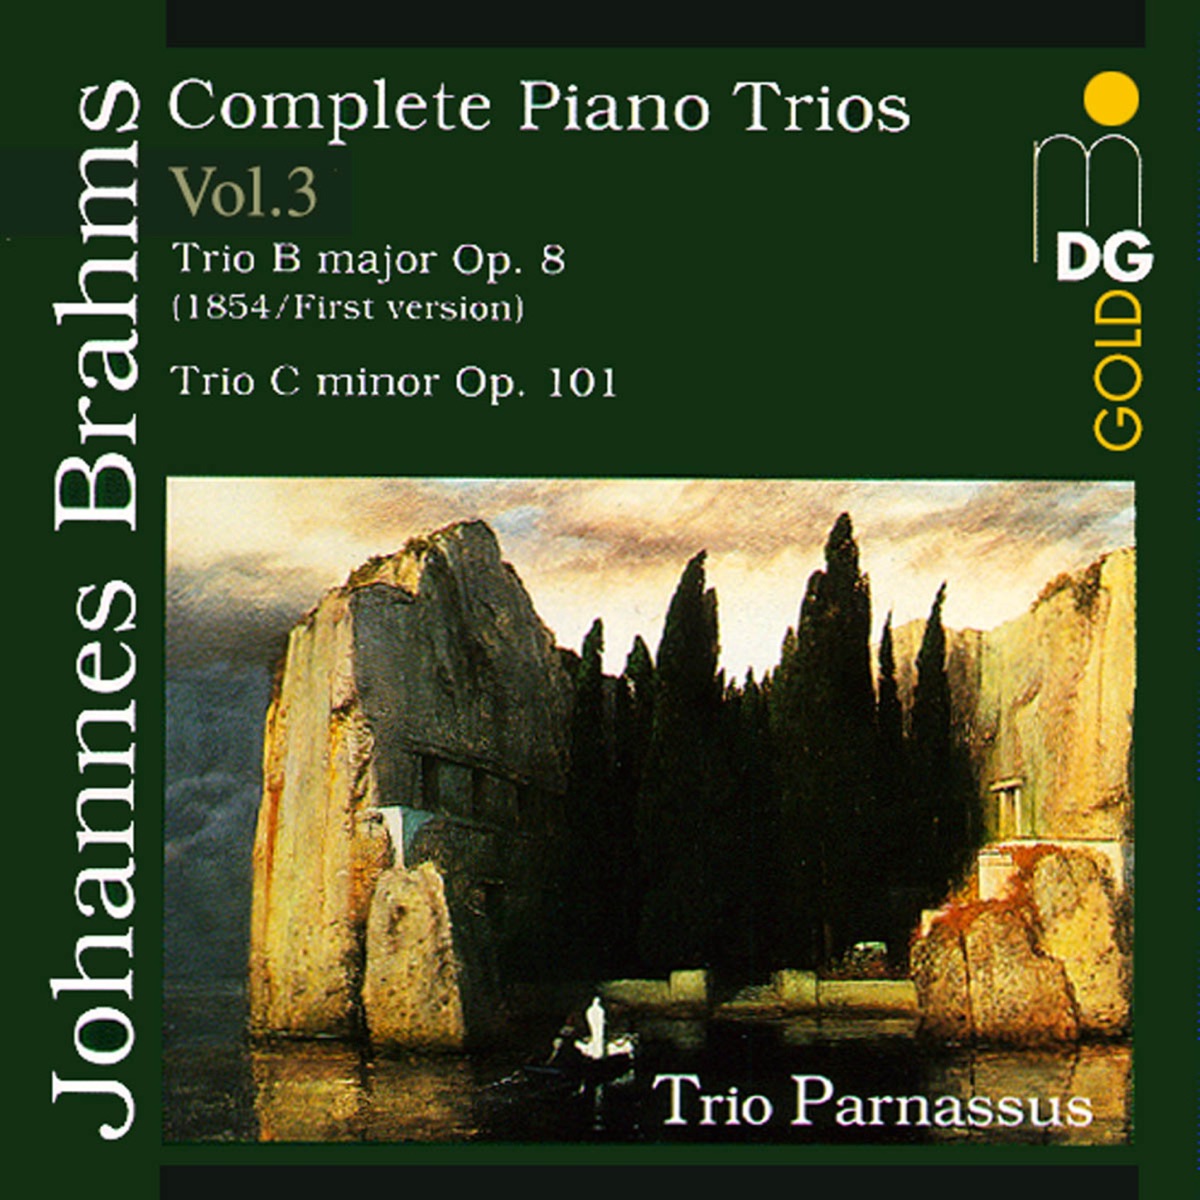 Brahms: Complete Piano Trios, Vol. 3 by Trio Parnassus on Apple Music